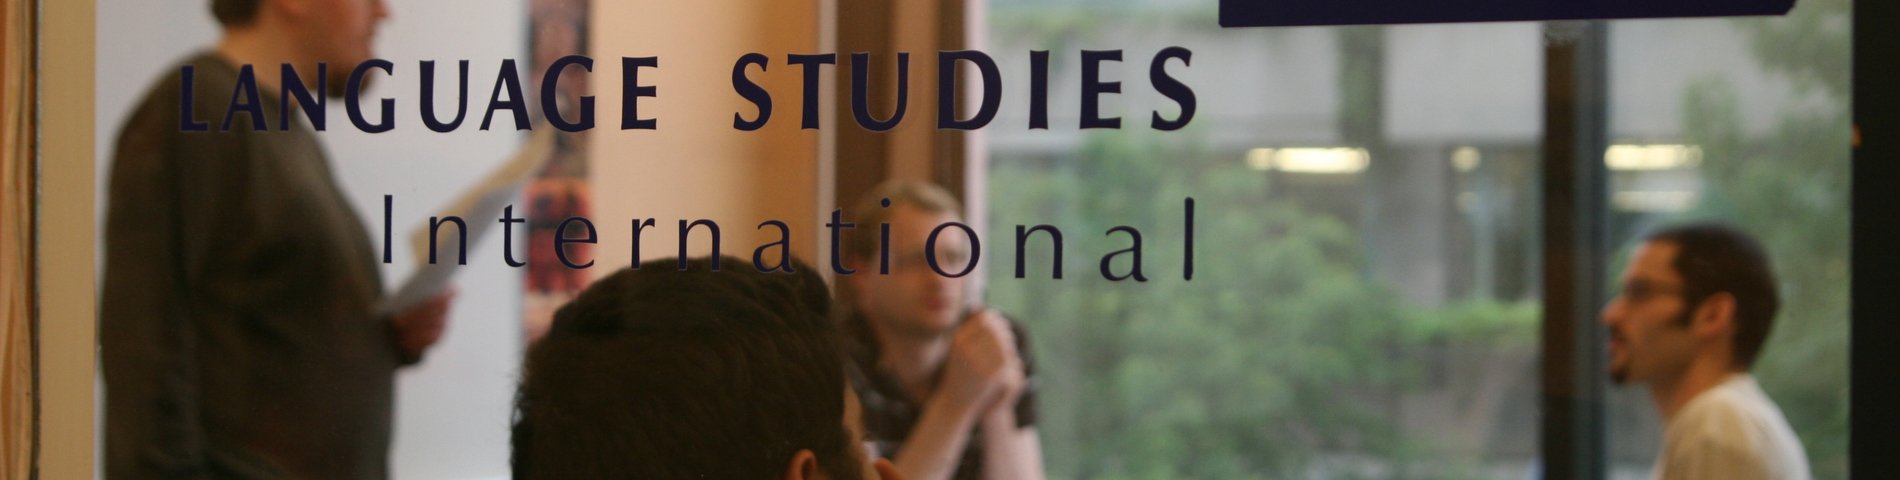 LSI - Language Studies International画像1